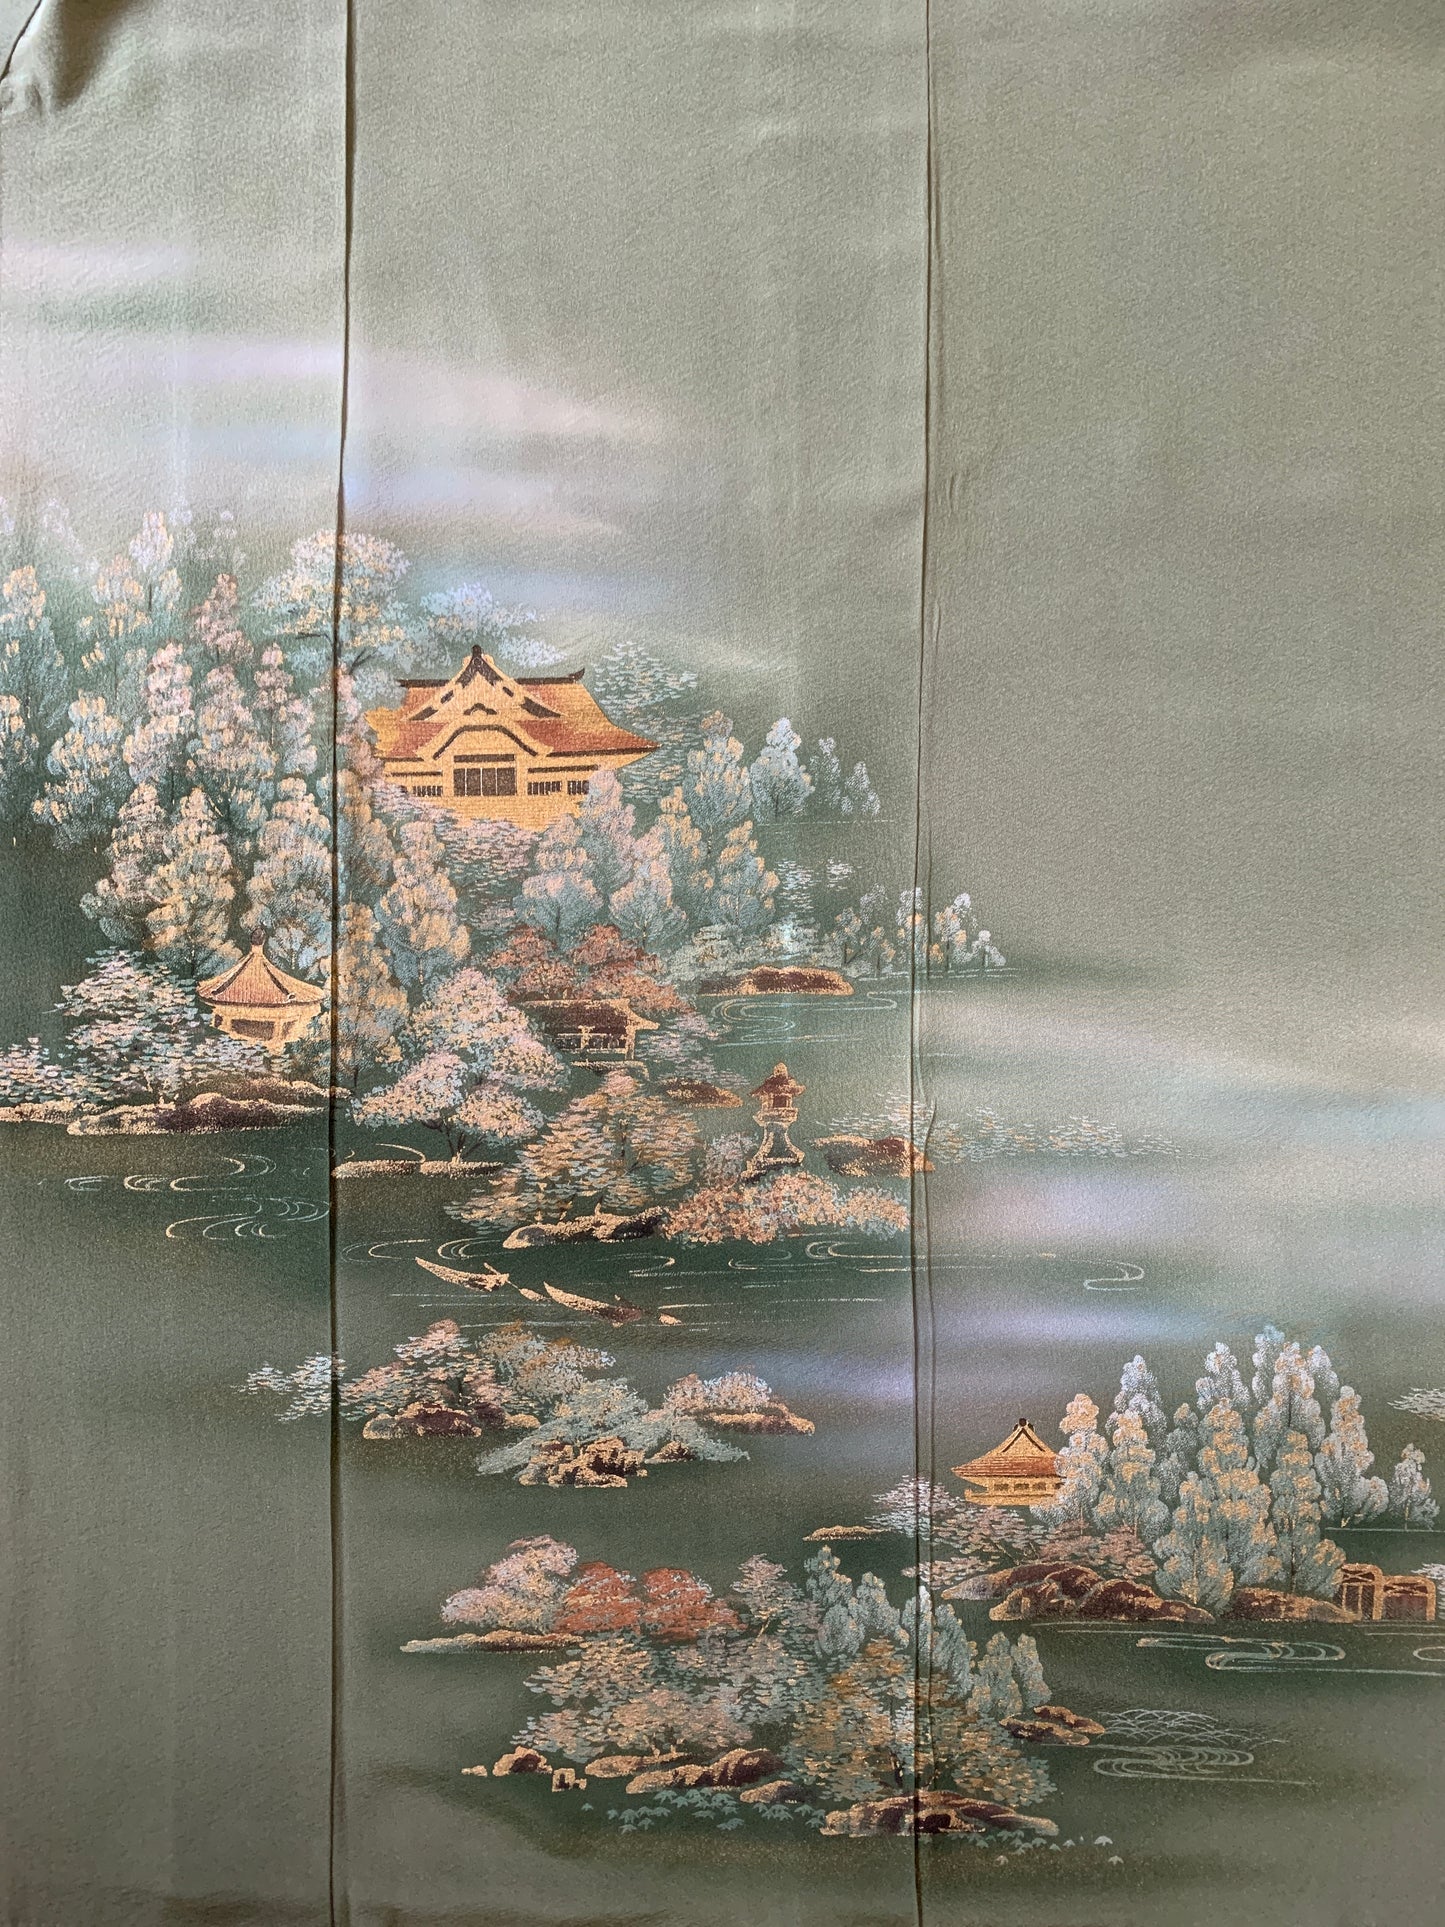 Kimono fabric for custom dress order, fabric #78